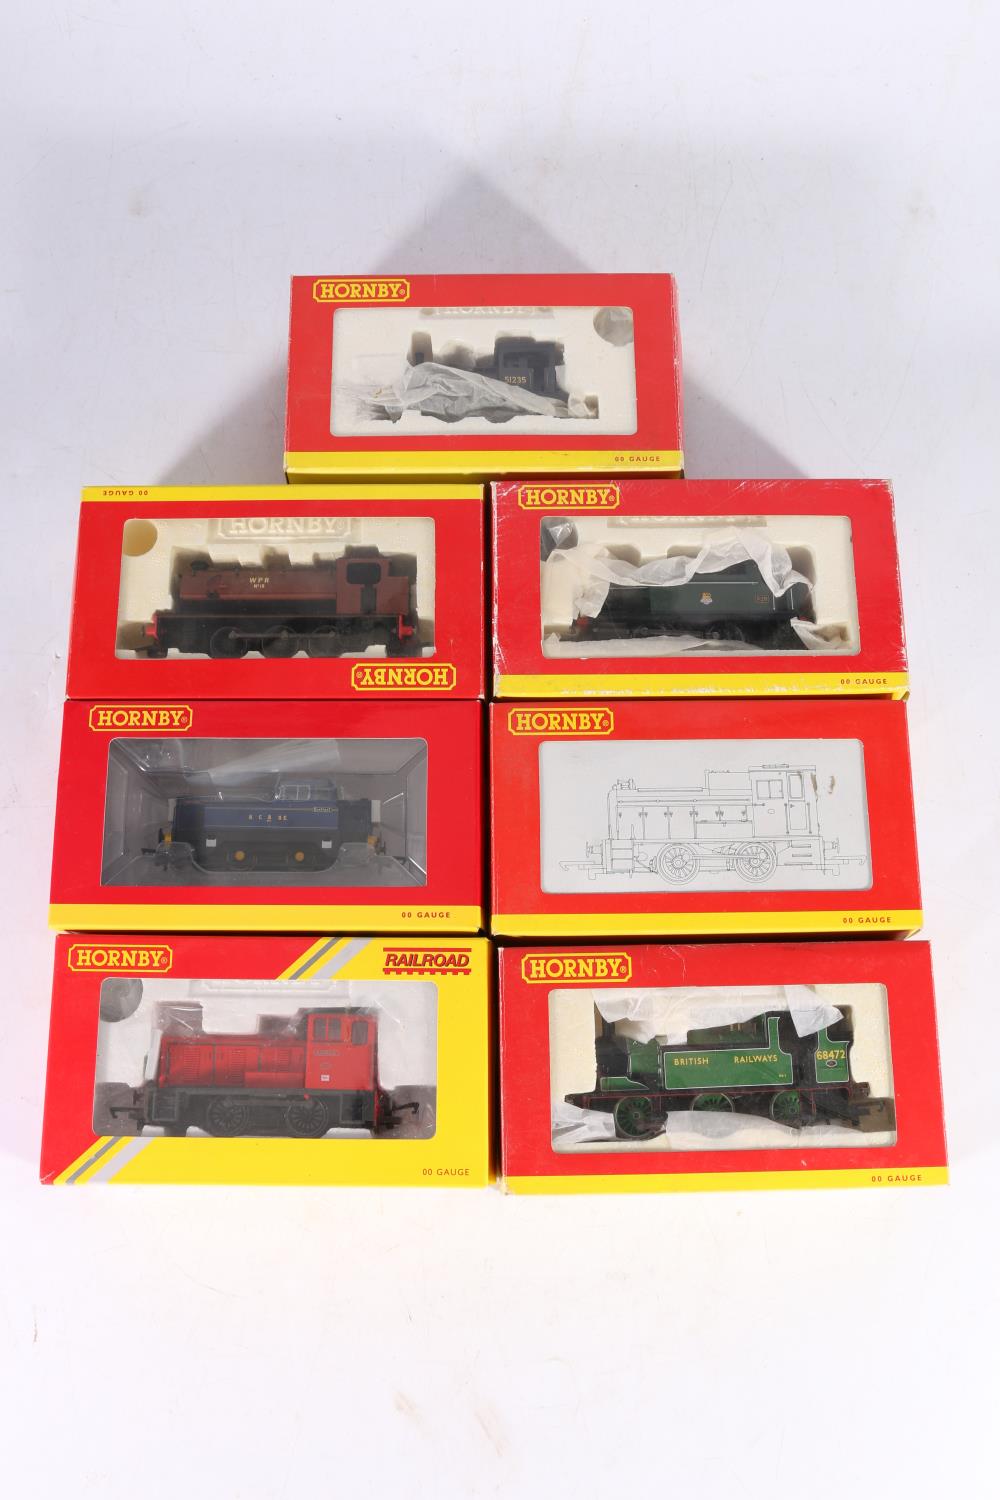 Hornby OO gauge model railways locomotives including R2453A 0-4-0ST Class 0F Pug locomotive 51235 BR